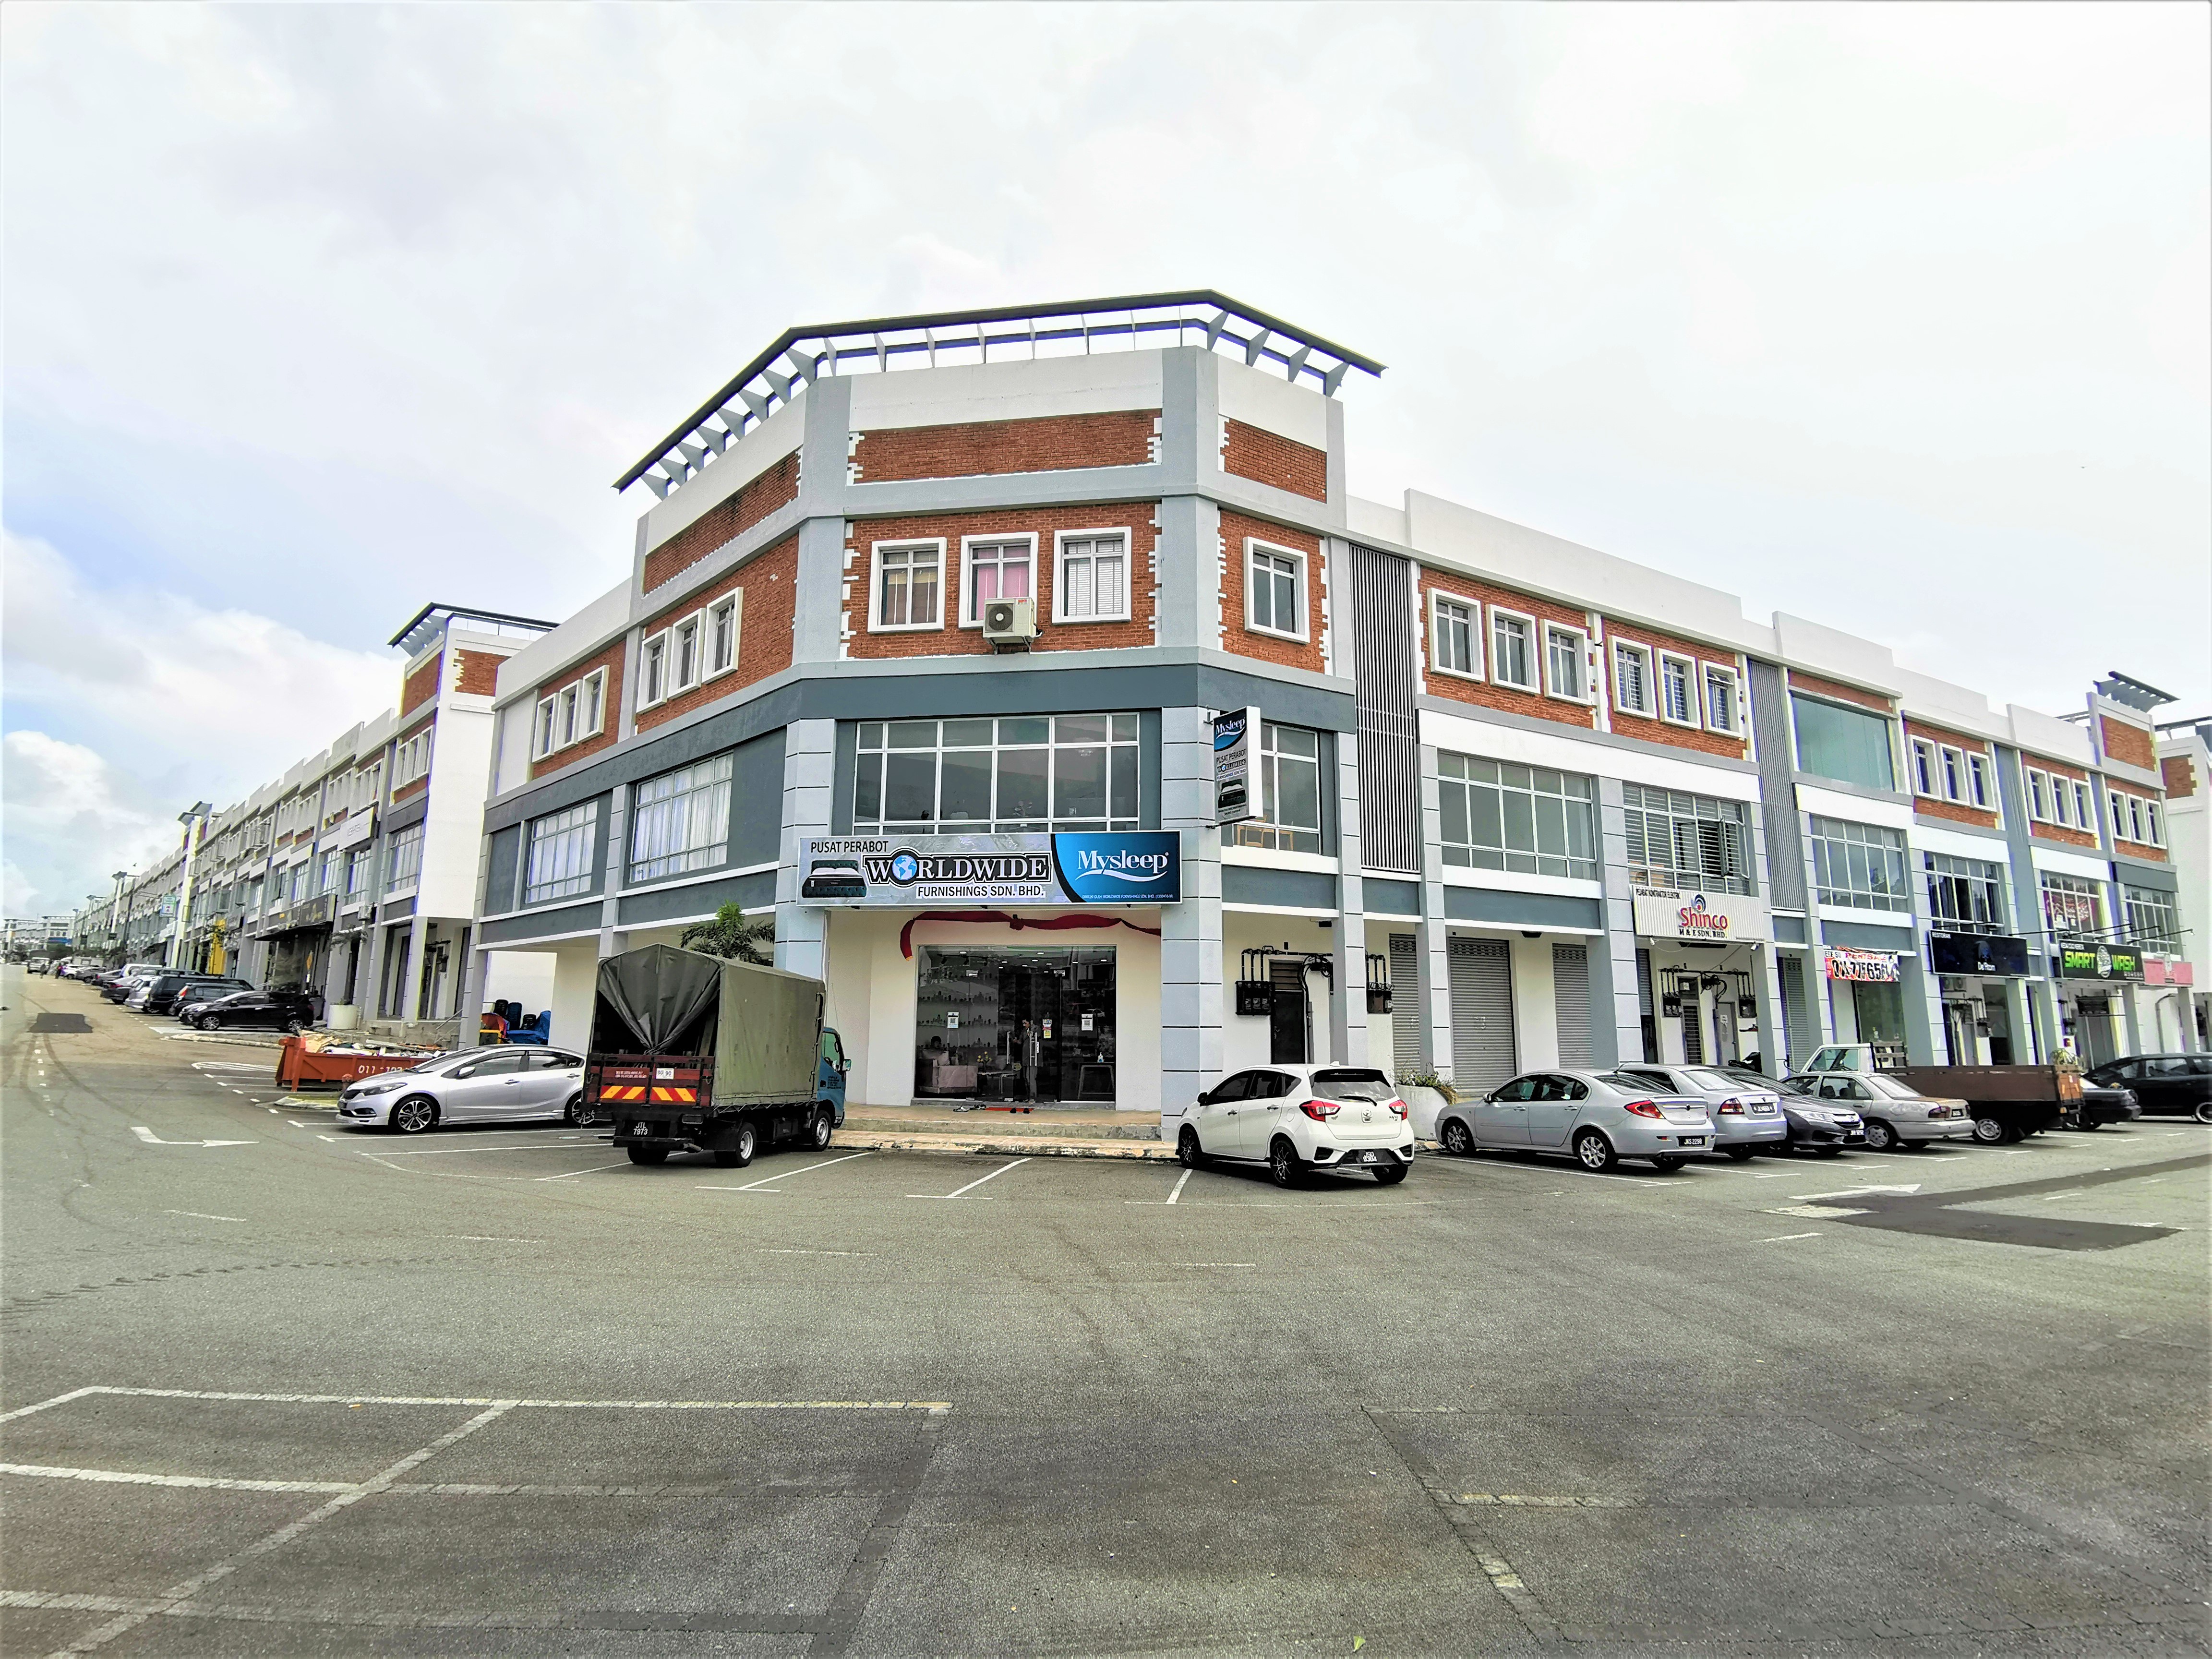 Located at Jalan Sentral 24, Taman Nusa Sentral, Iskandar Puteri